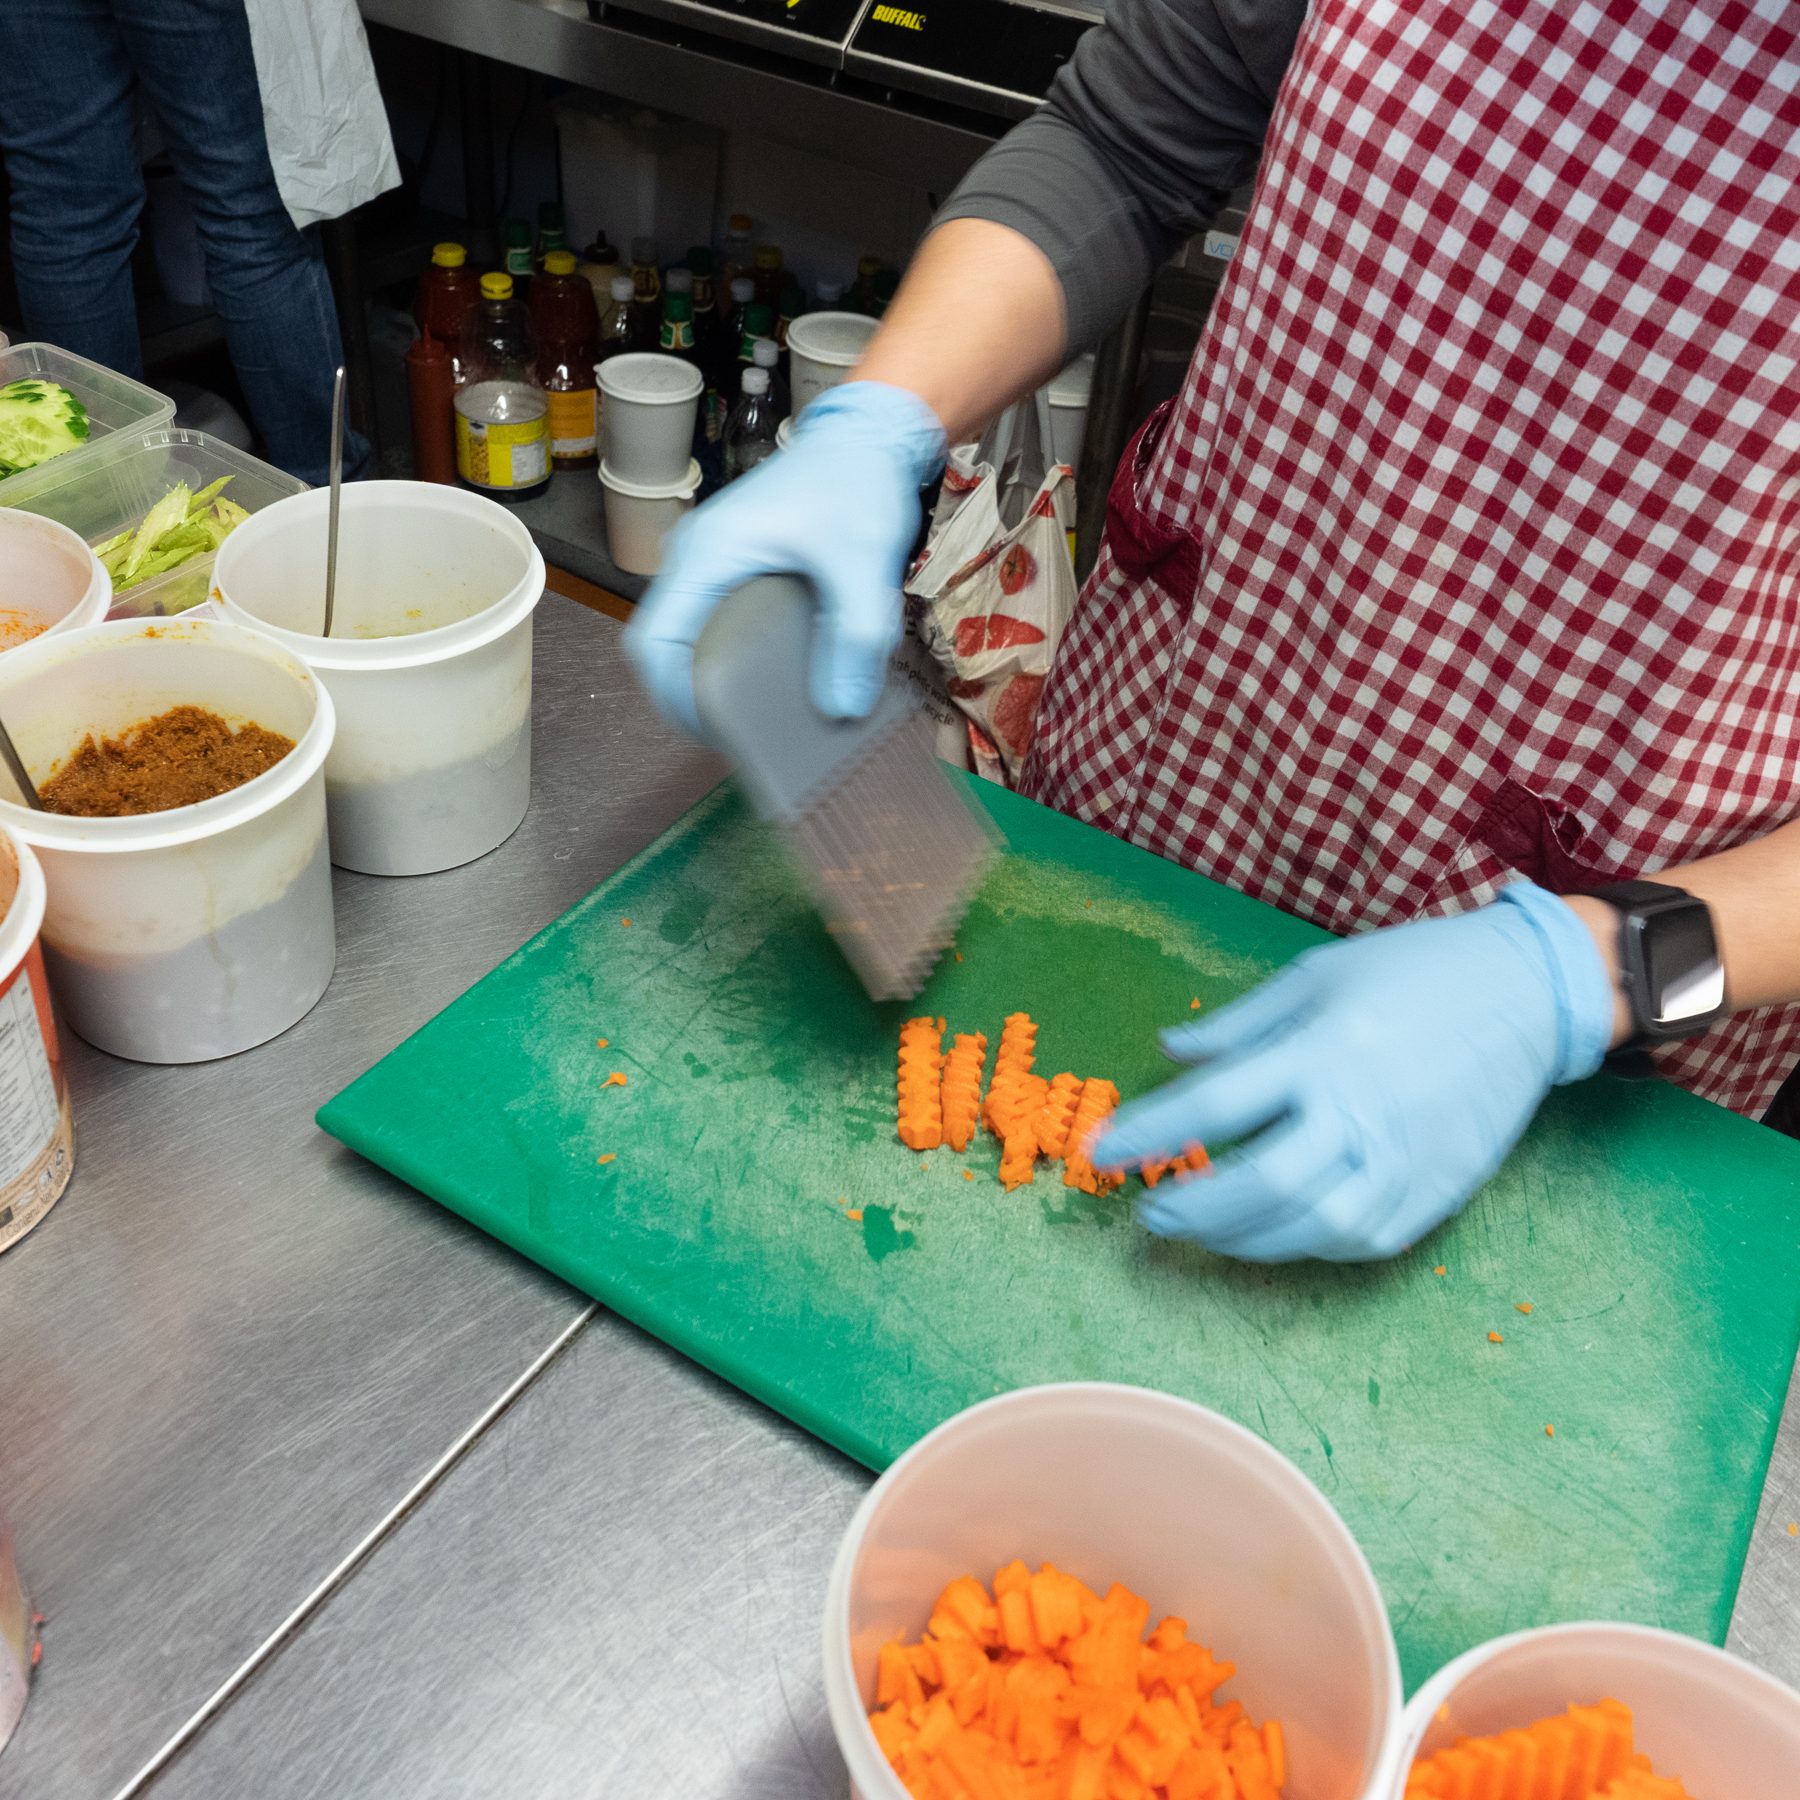 Slicing Carrots While Preparing Food